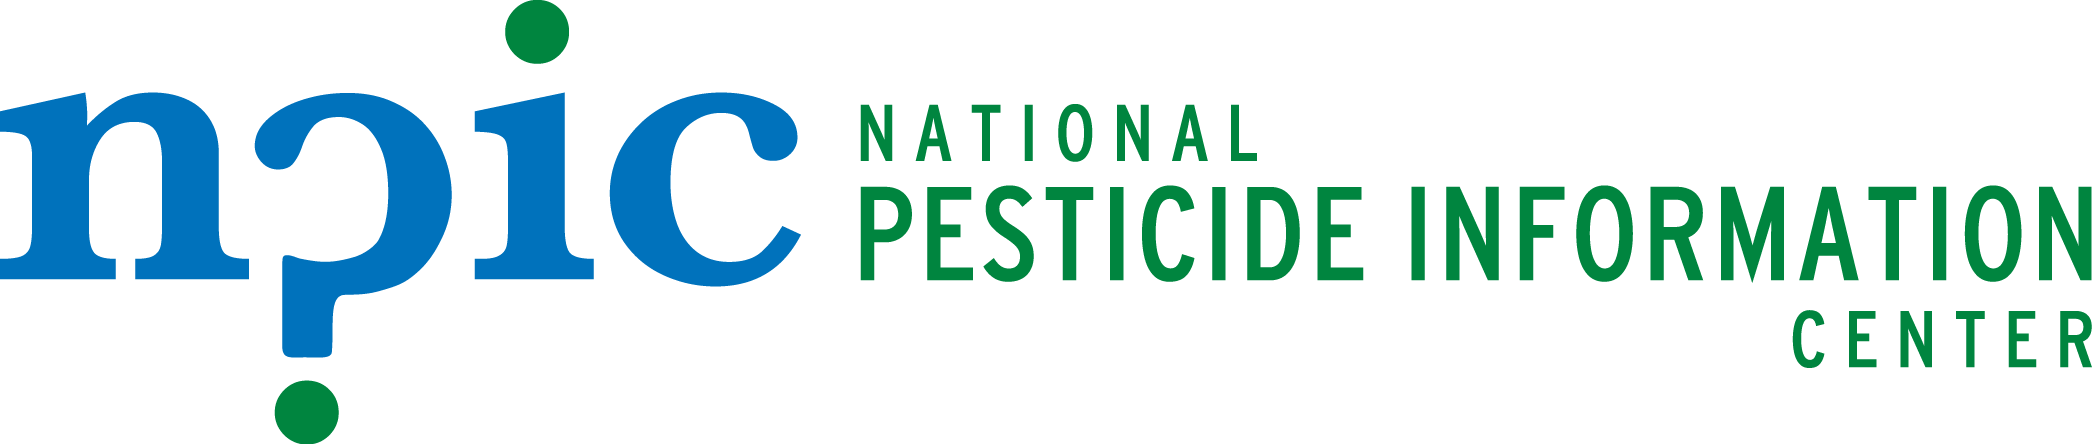 National Pesticide Information Center